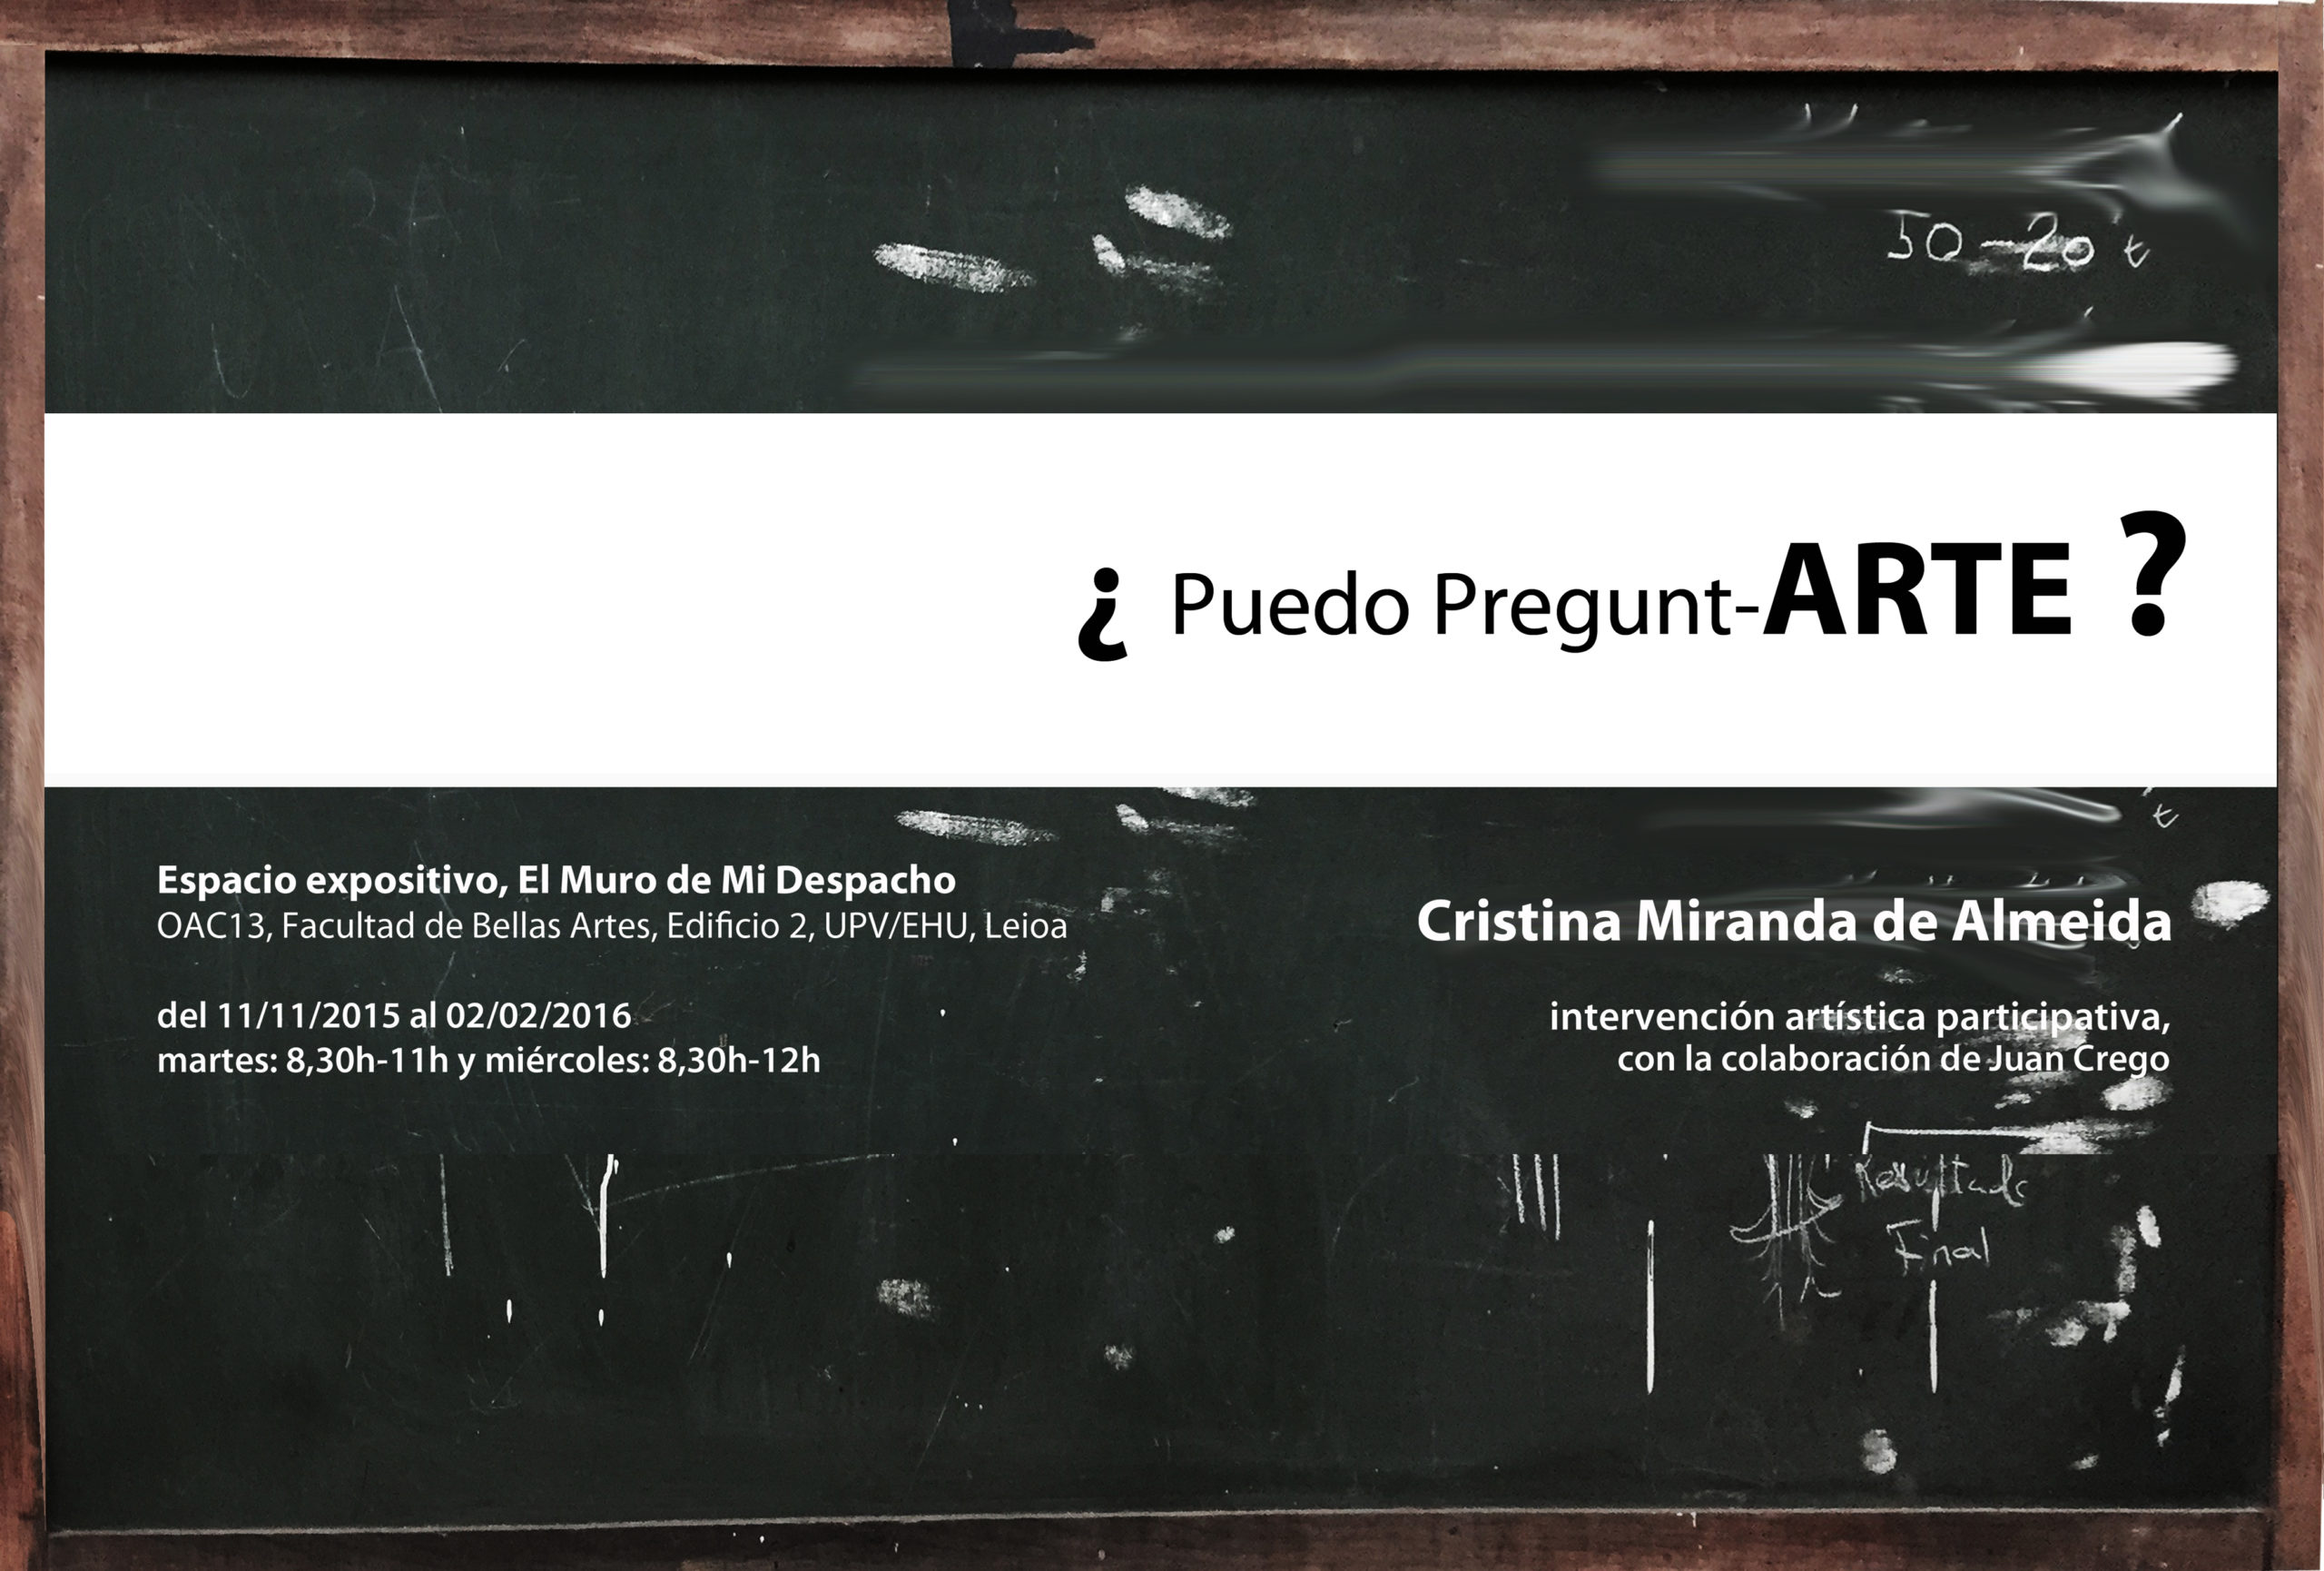 ¿Puedo pregun-ARTE? Cristina Miranda de Almeida